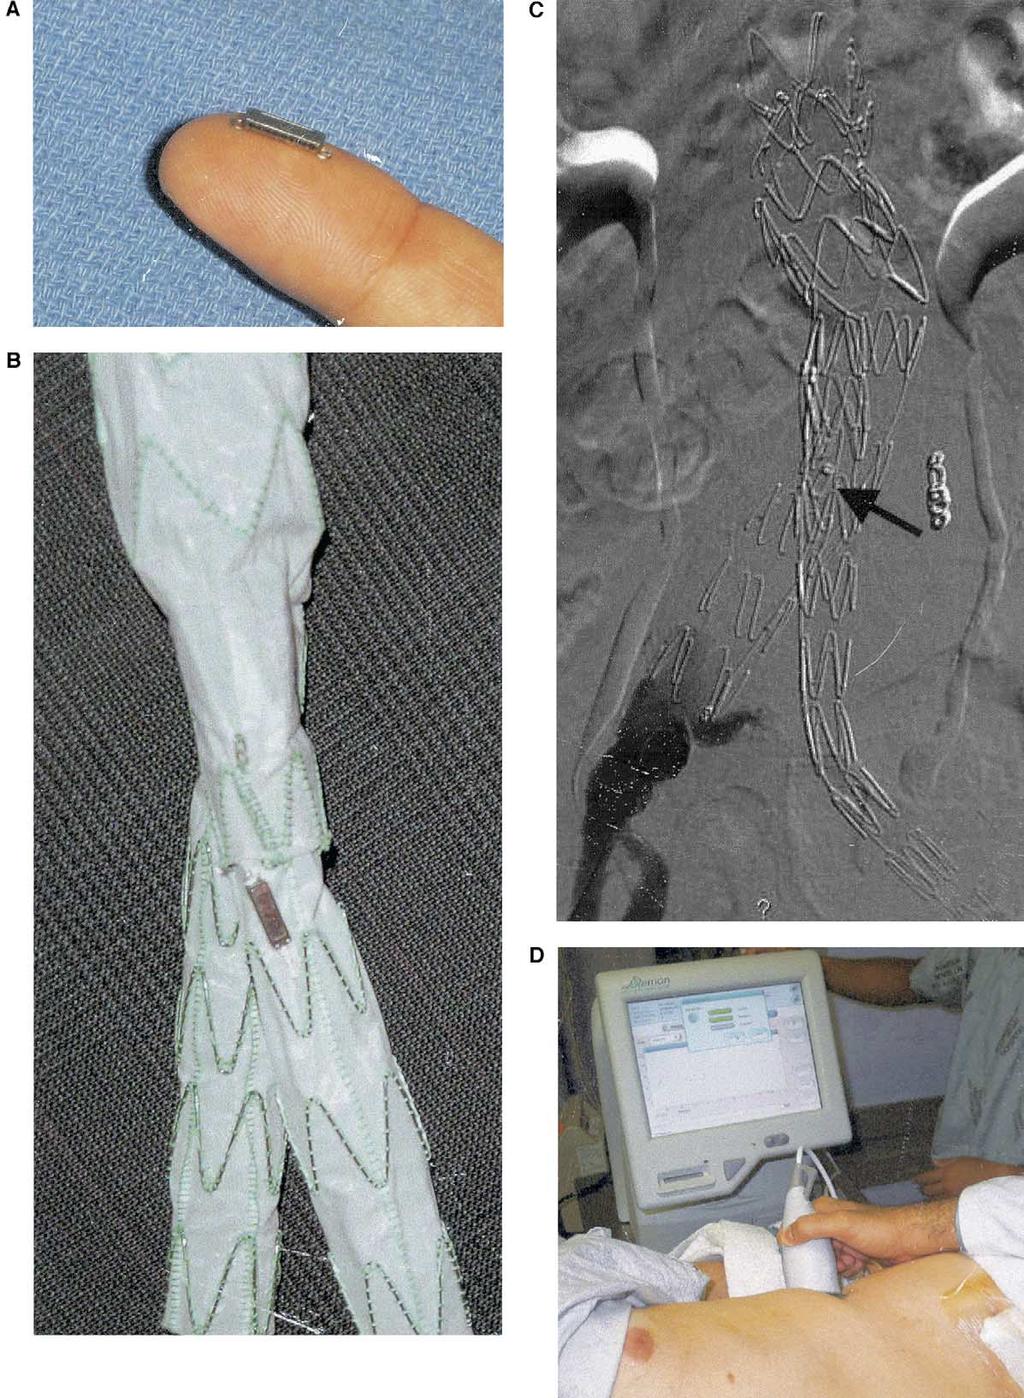 JOURNAL OF VASCULAR SURGERY Volume 40, Number 3 Ellozy et al 407 Fig 1. A, Impressure abdominal aortic aneurysm sac pressure transducer (Remon Medical).